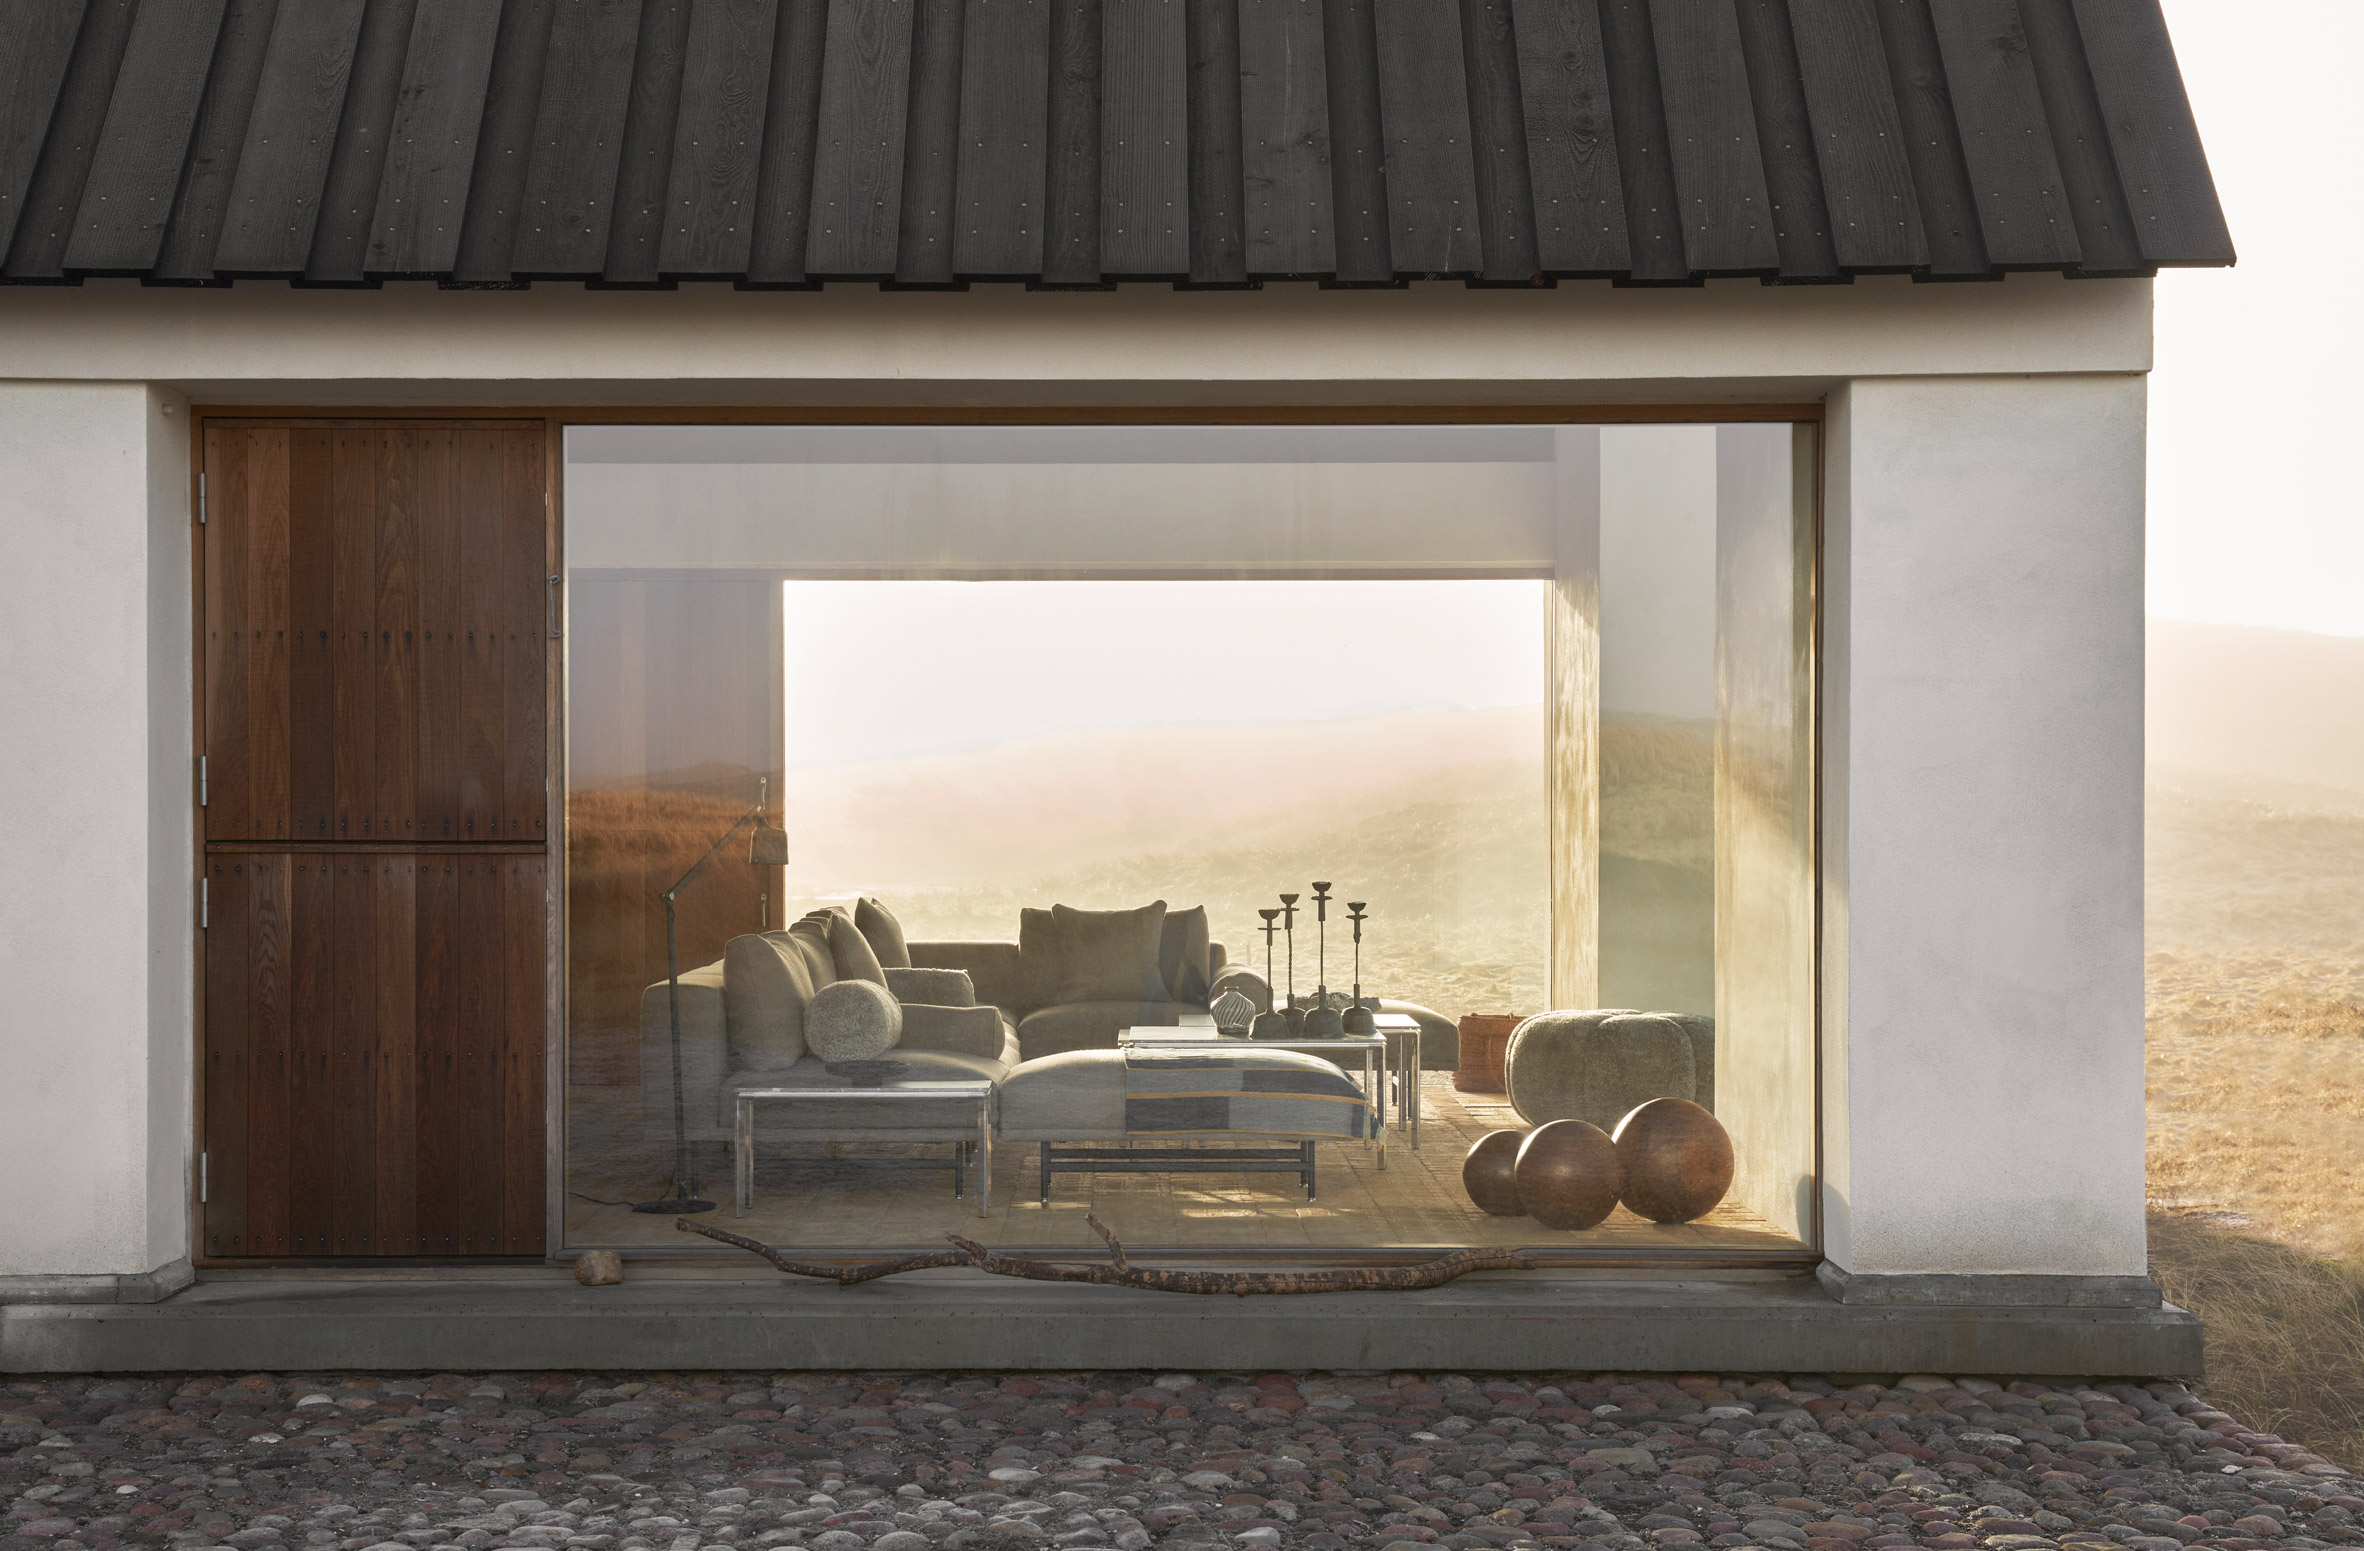 Glazing in guesthouse by Hahn Lavsen in Denmark